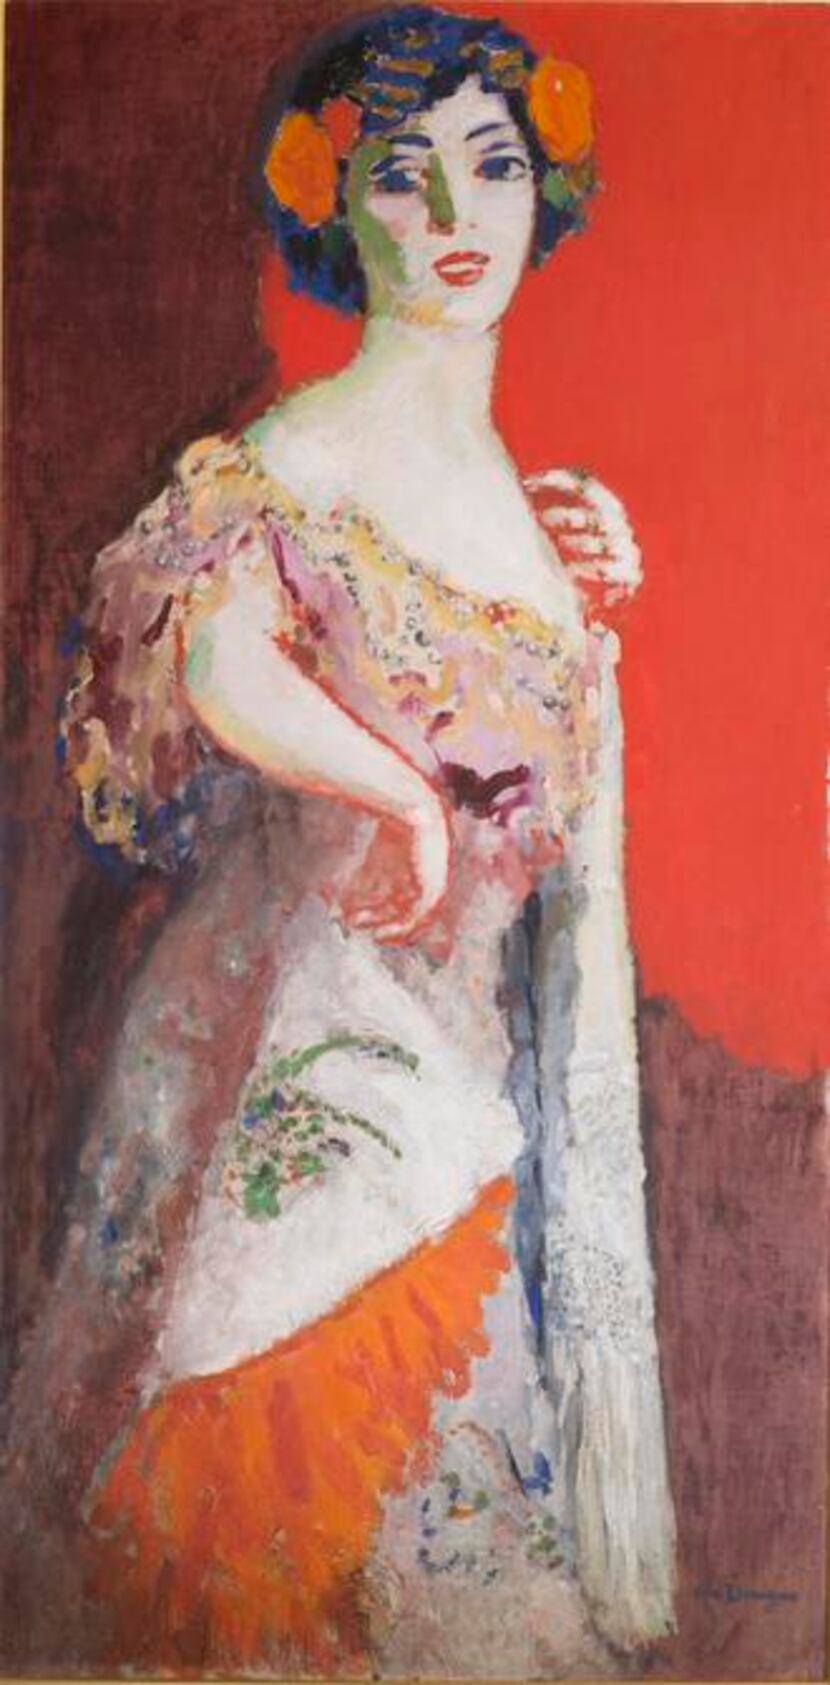 
Kees Van Dongen, "Portrait de Madame Malpel," circa 1908. Oil on canvas.